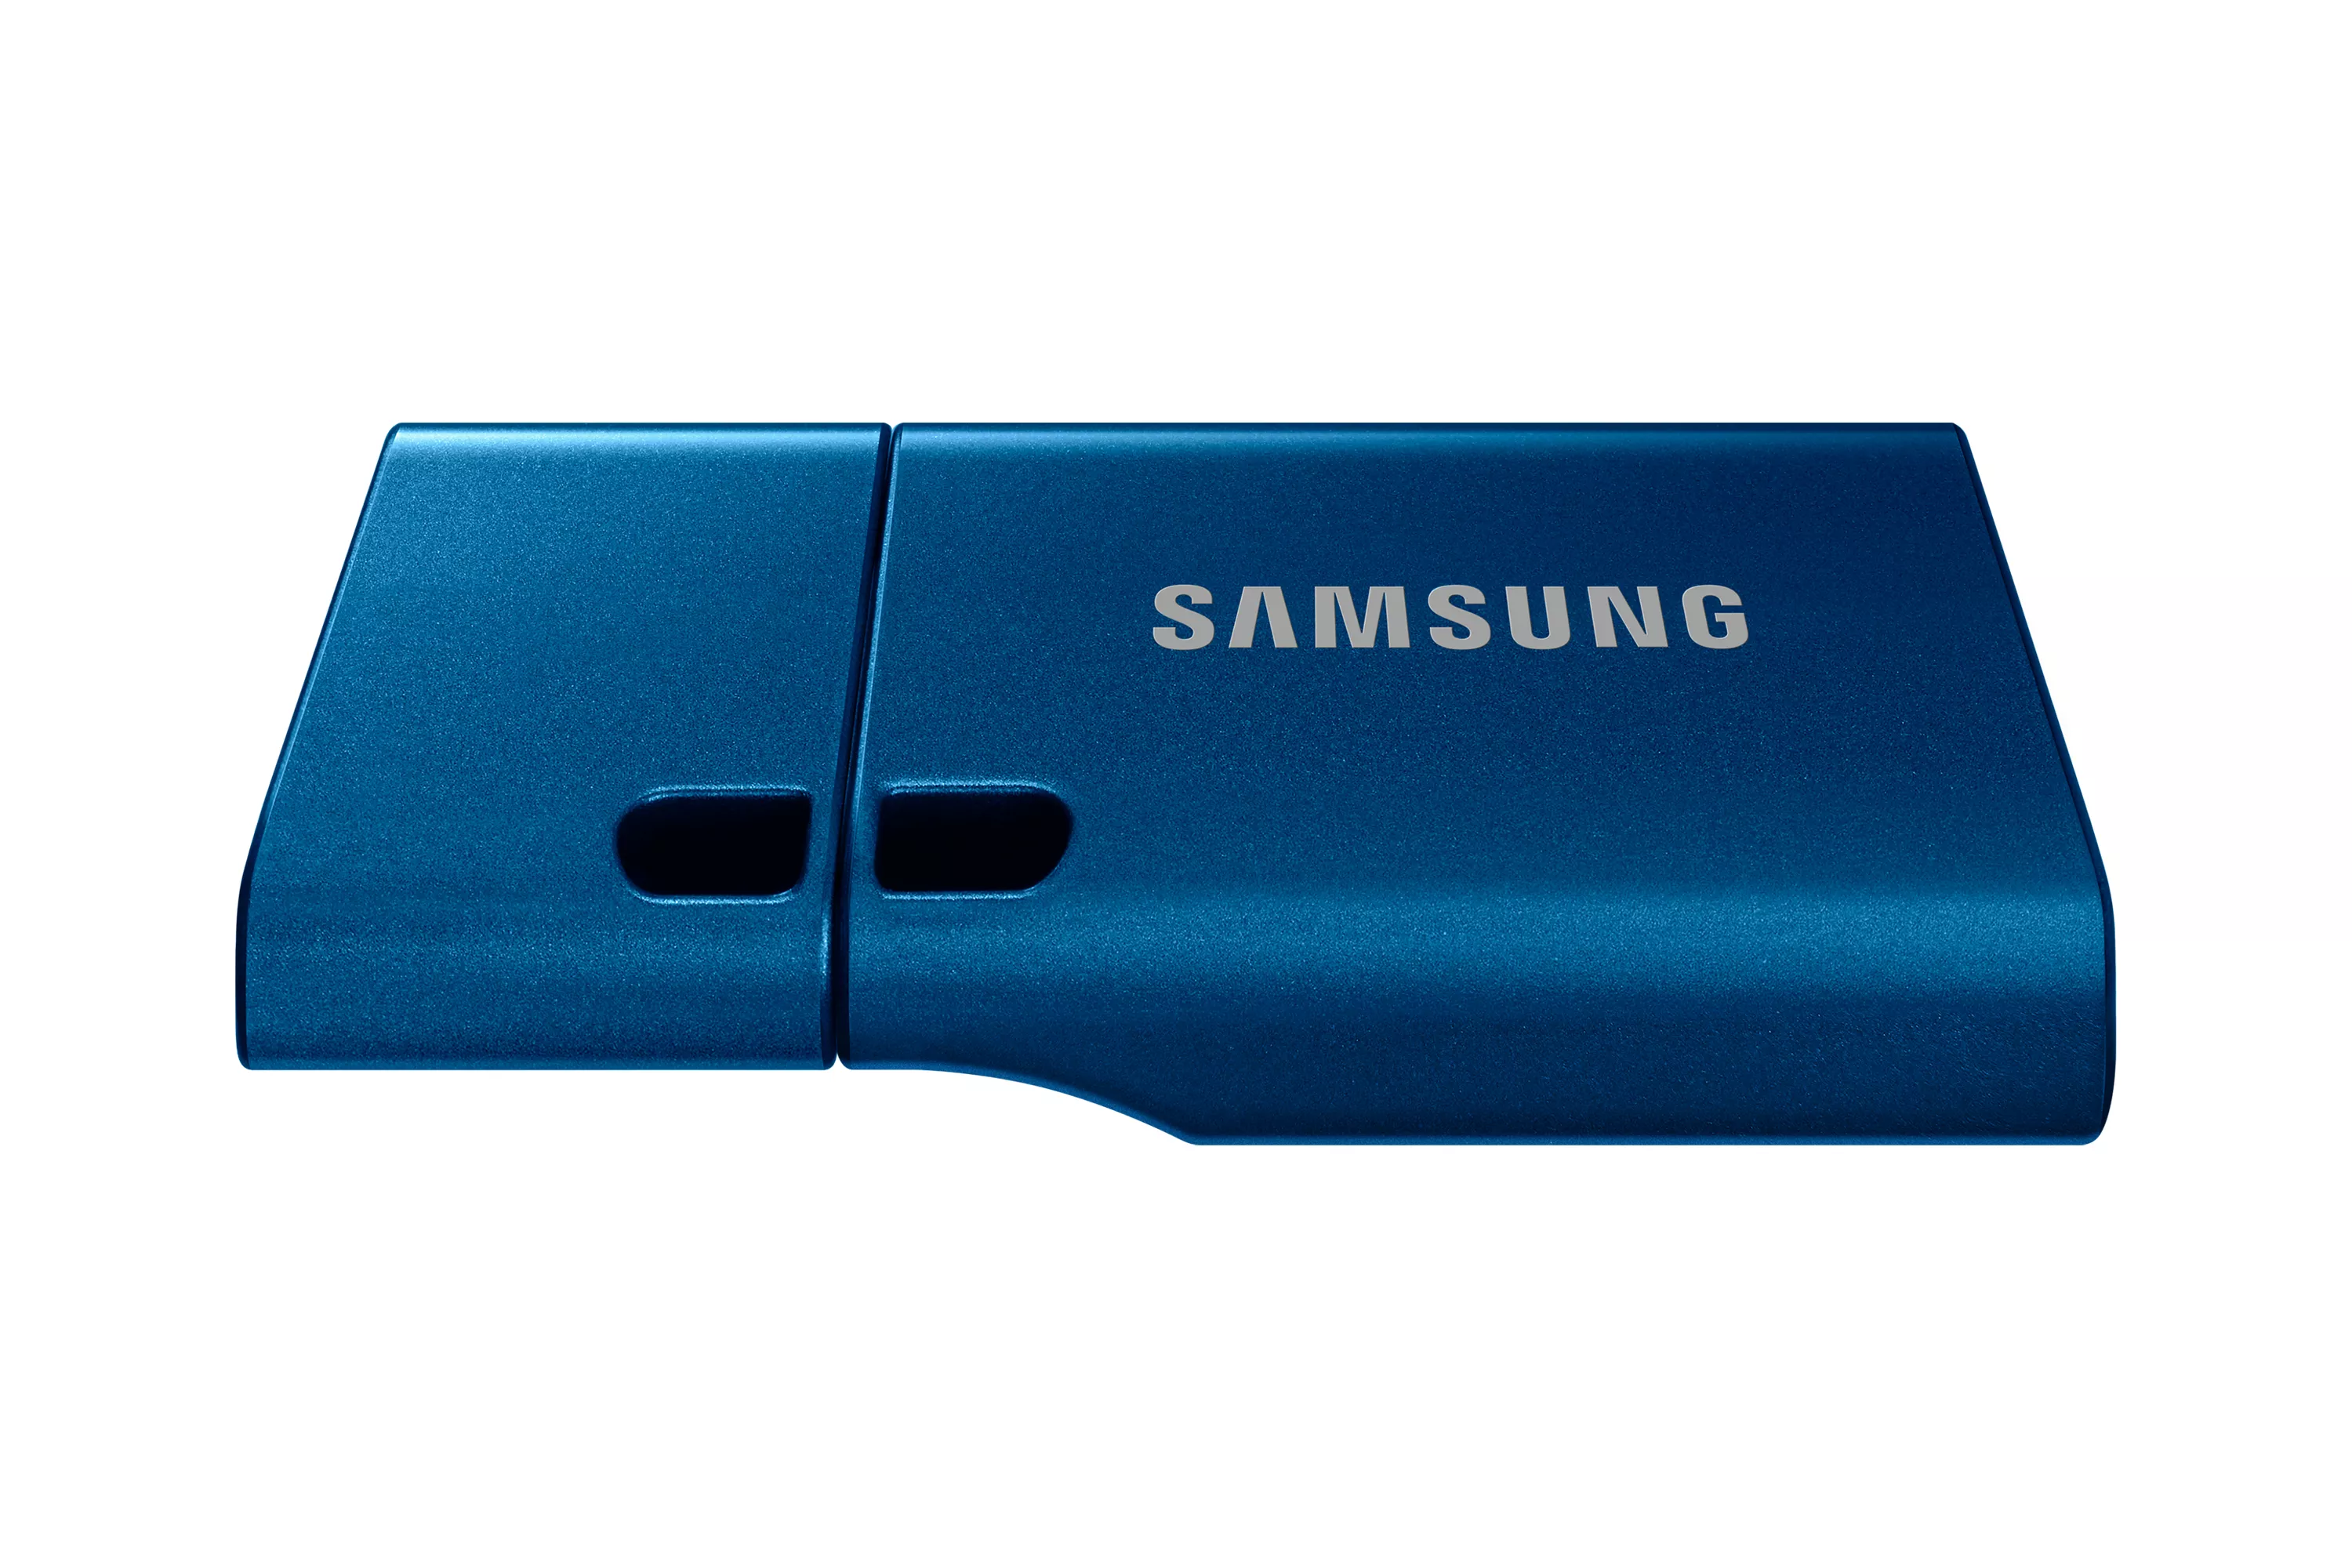 Vente SAMSUNG USB Type-C 64Go 300Mo/s USB 3.1 Flash Samsung au meilleur prix - visuel 8